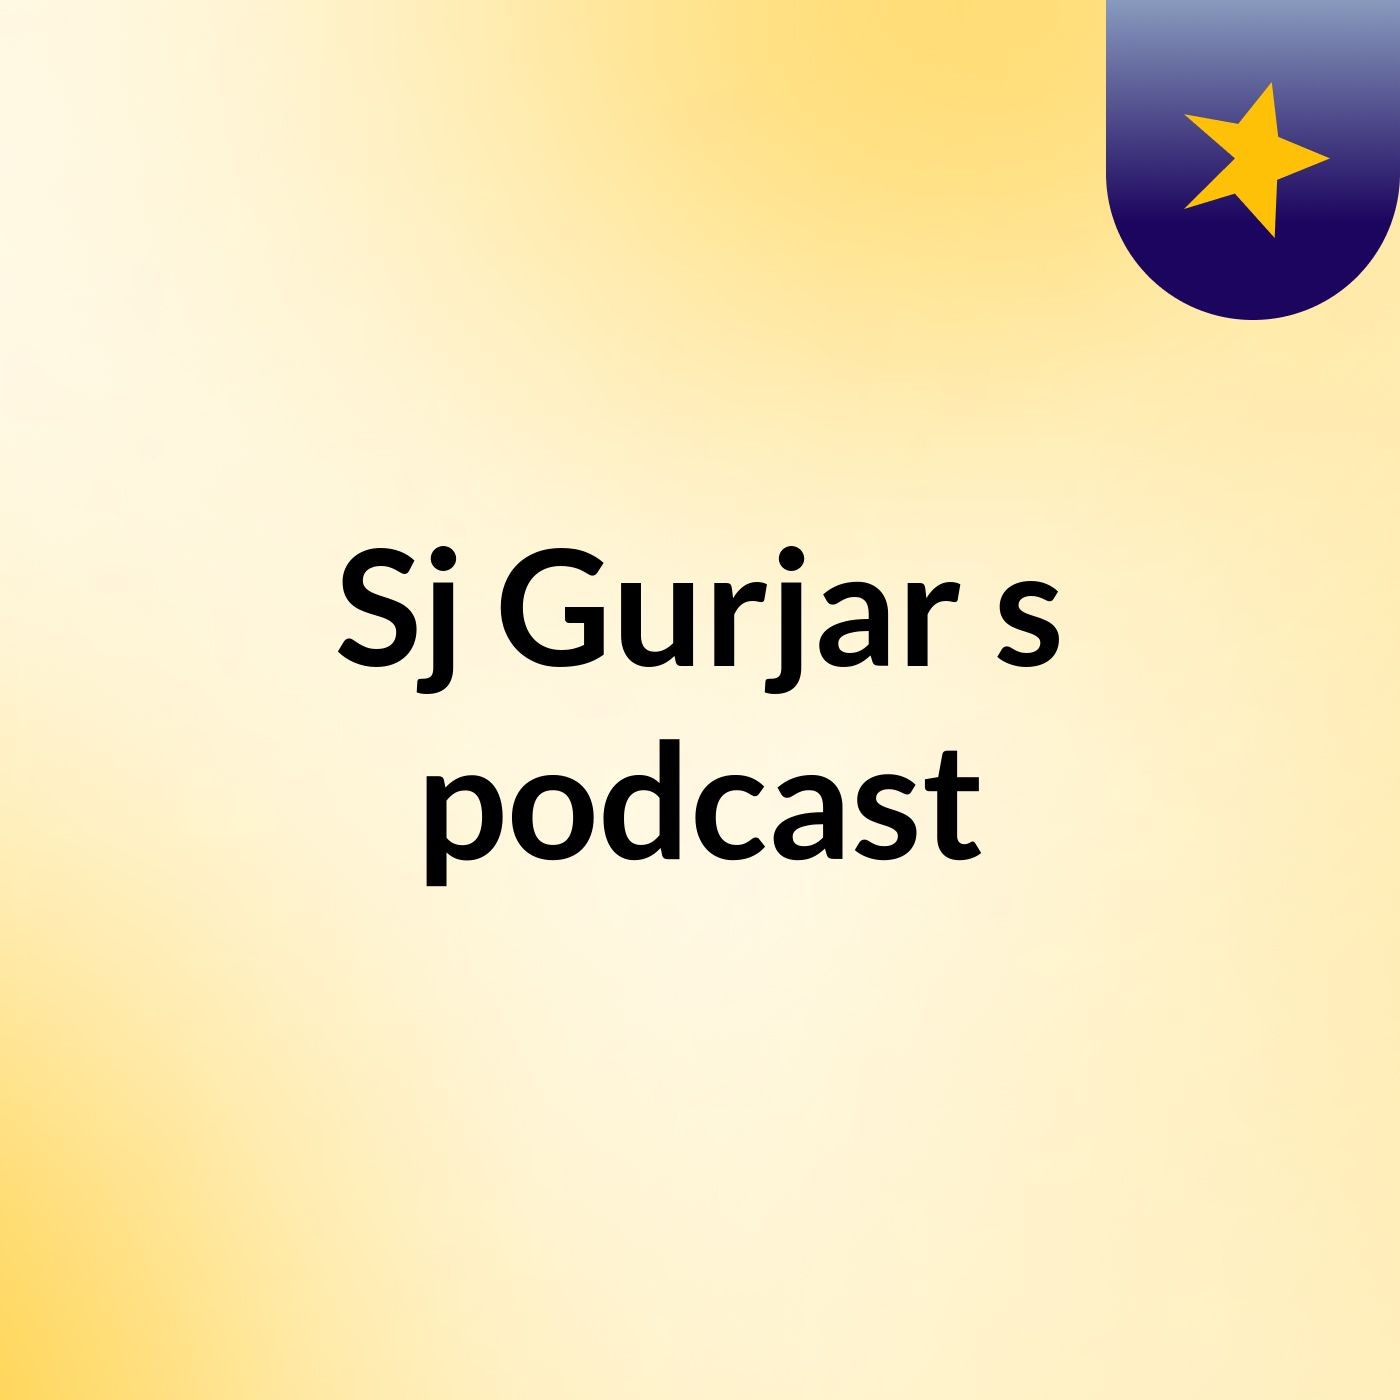 Sj Gurjar's podcast